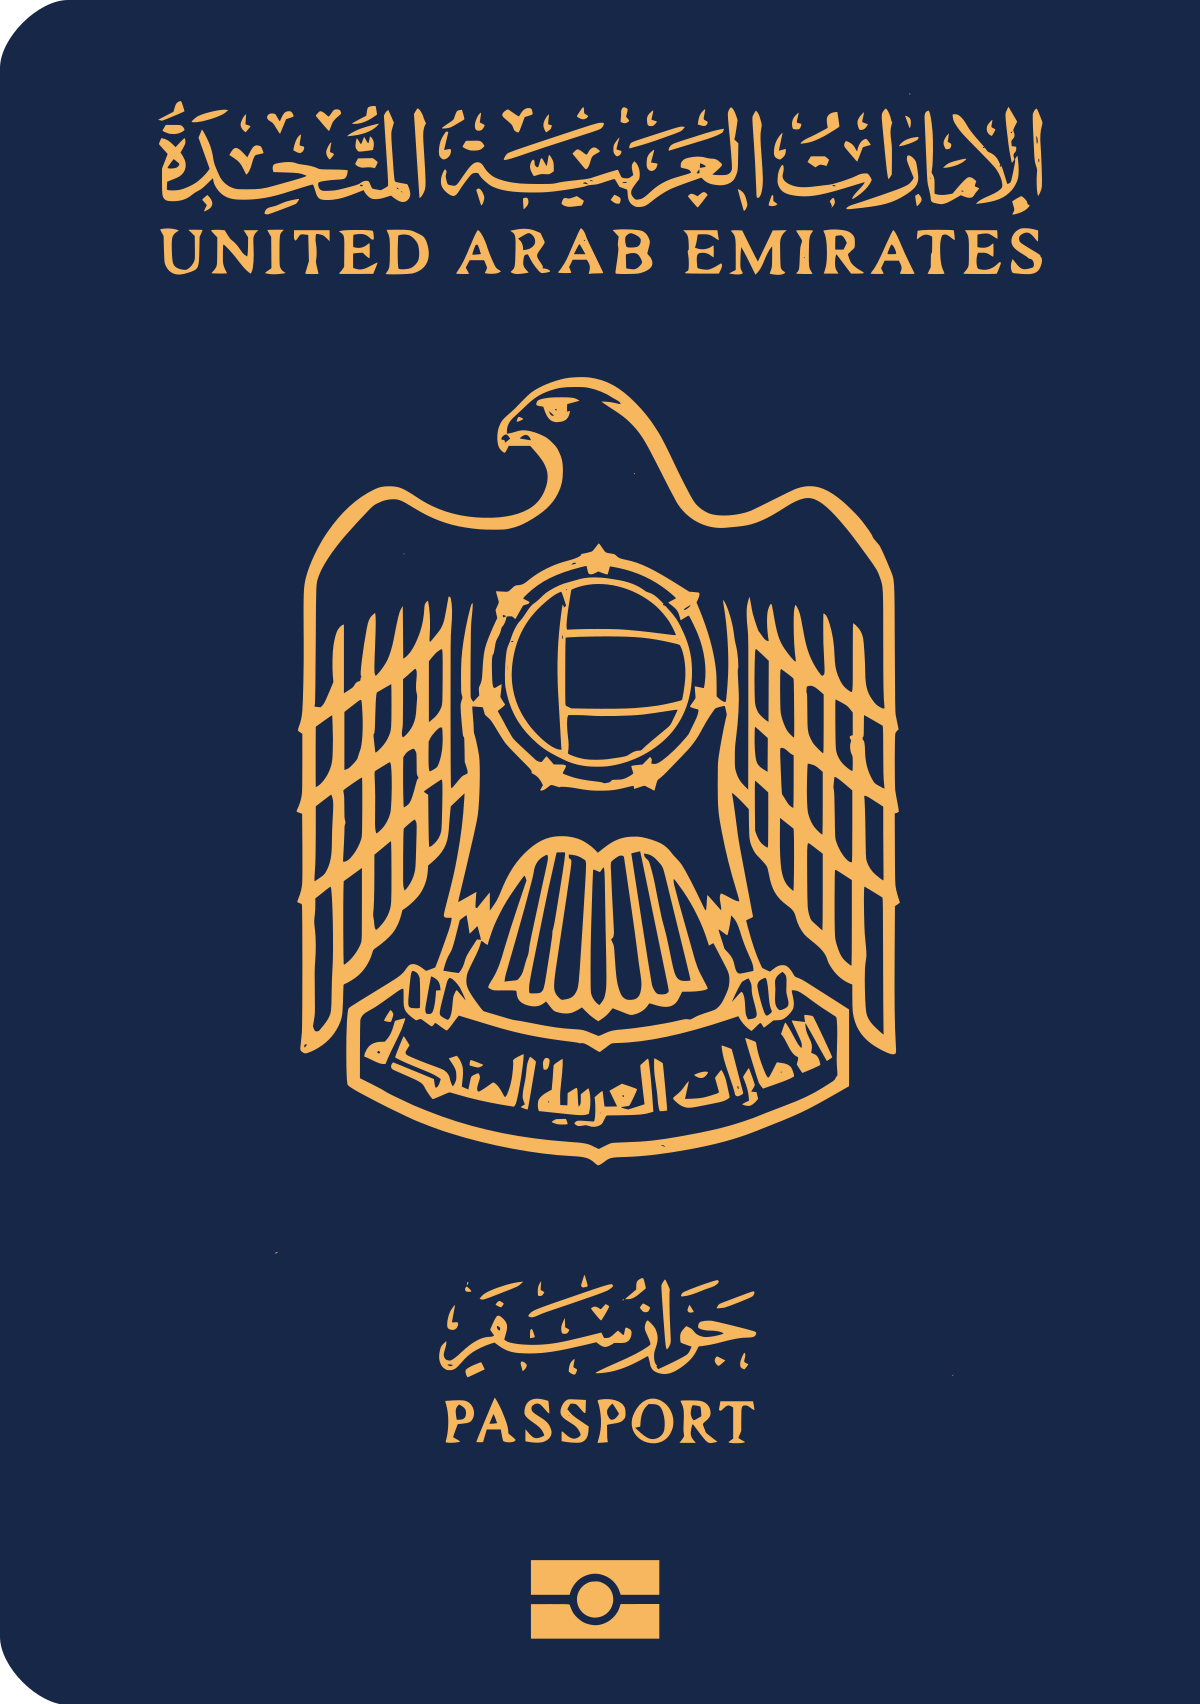 Visa requirements for Emirati citizens - Wikipedia